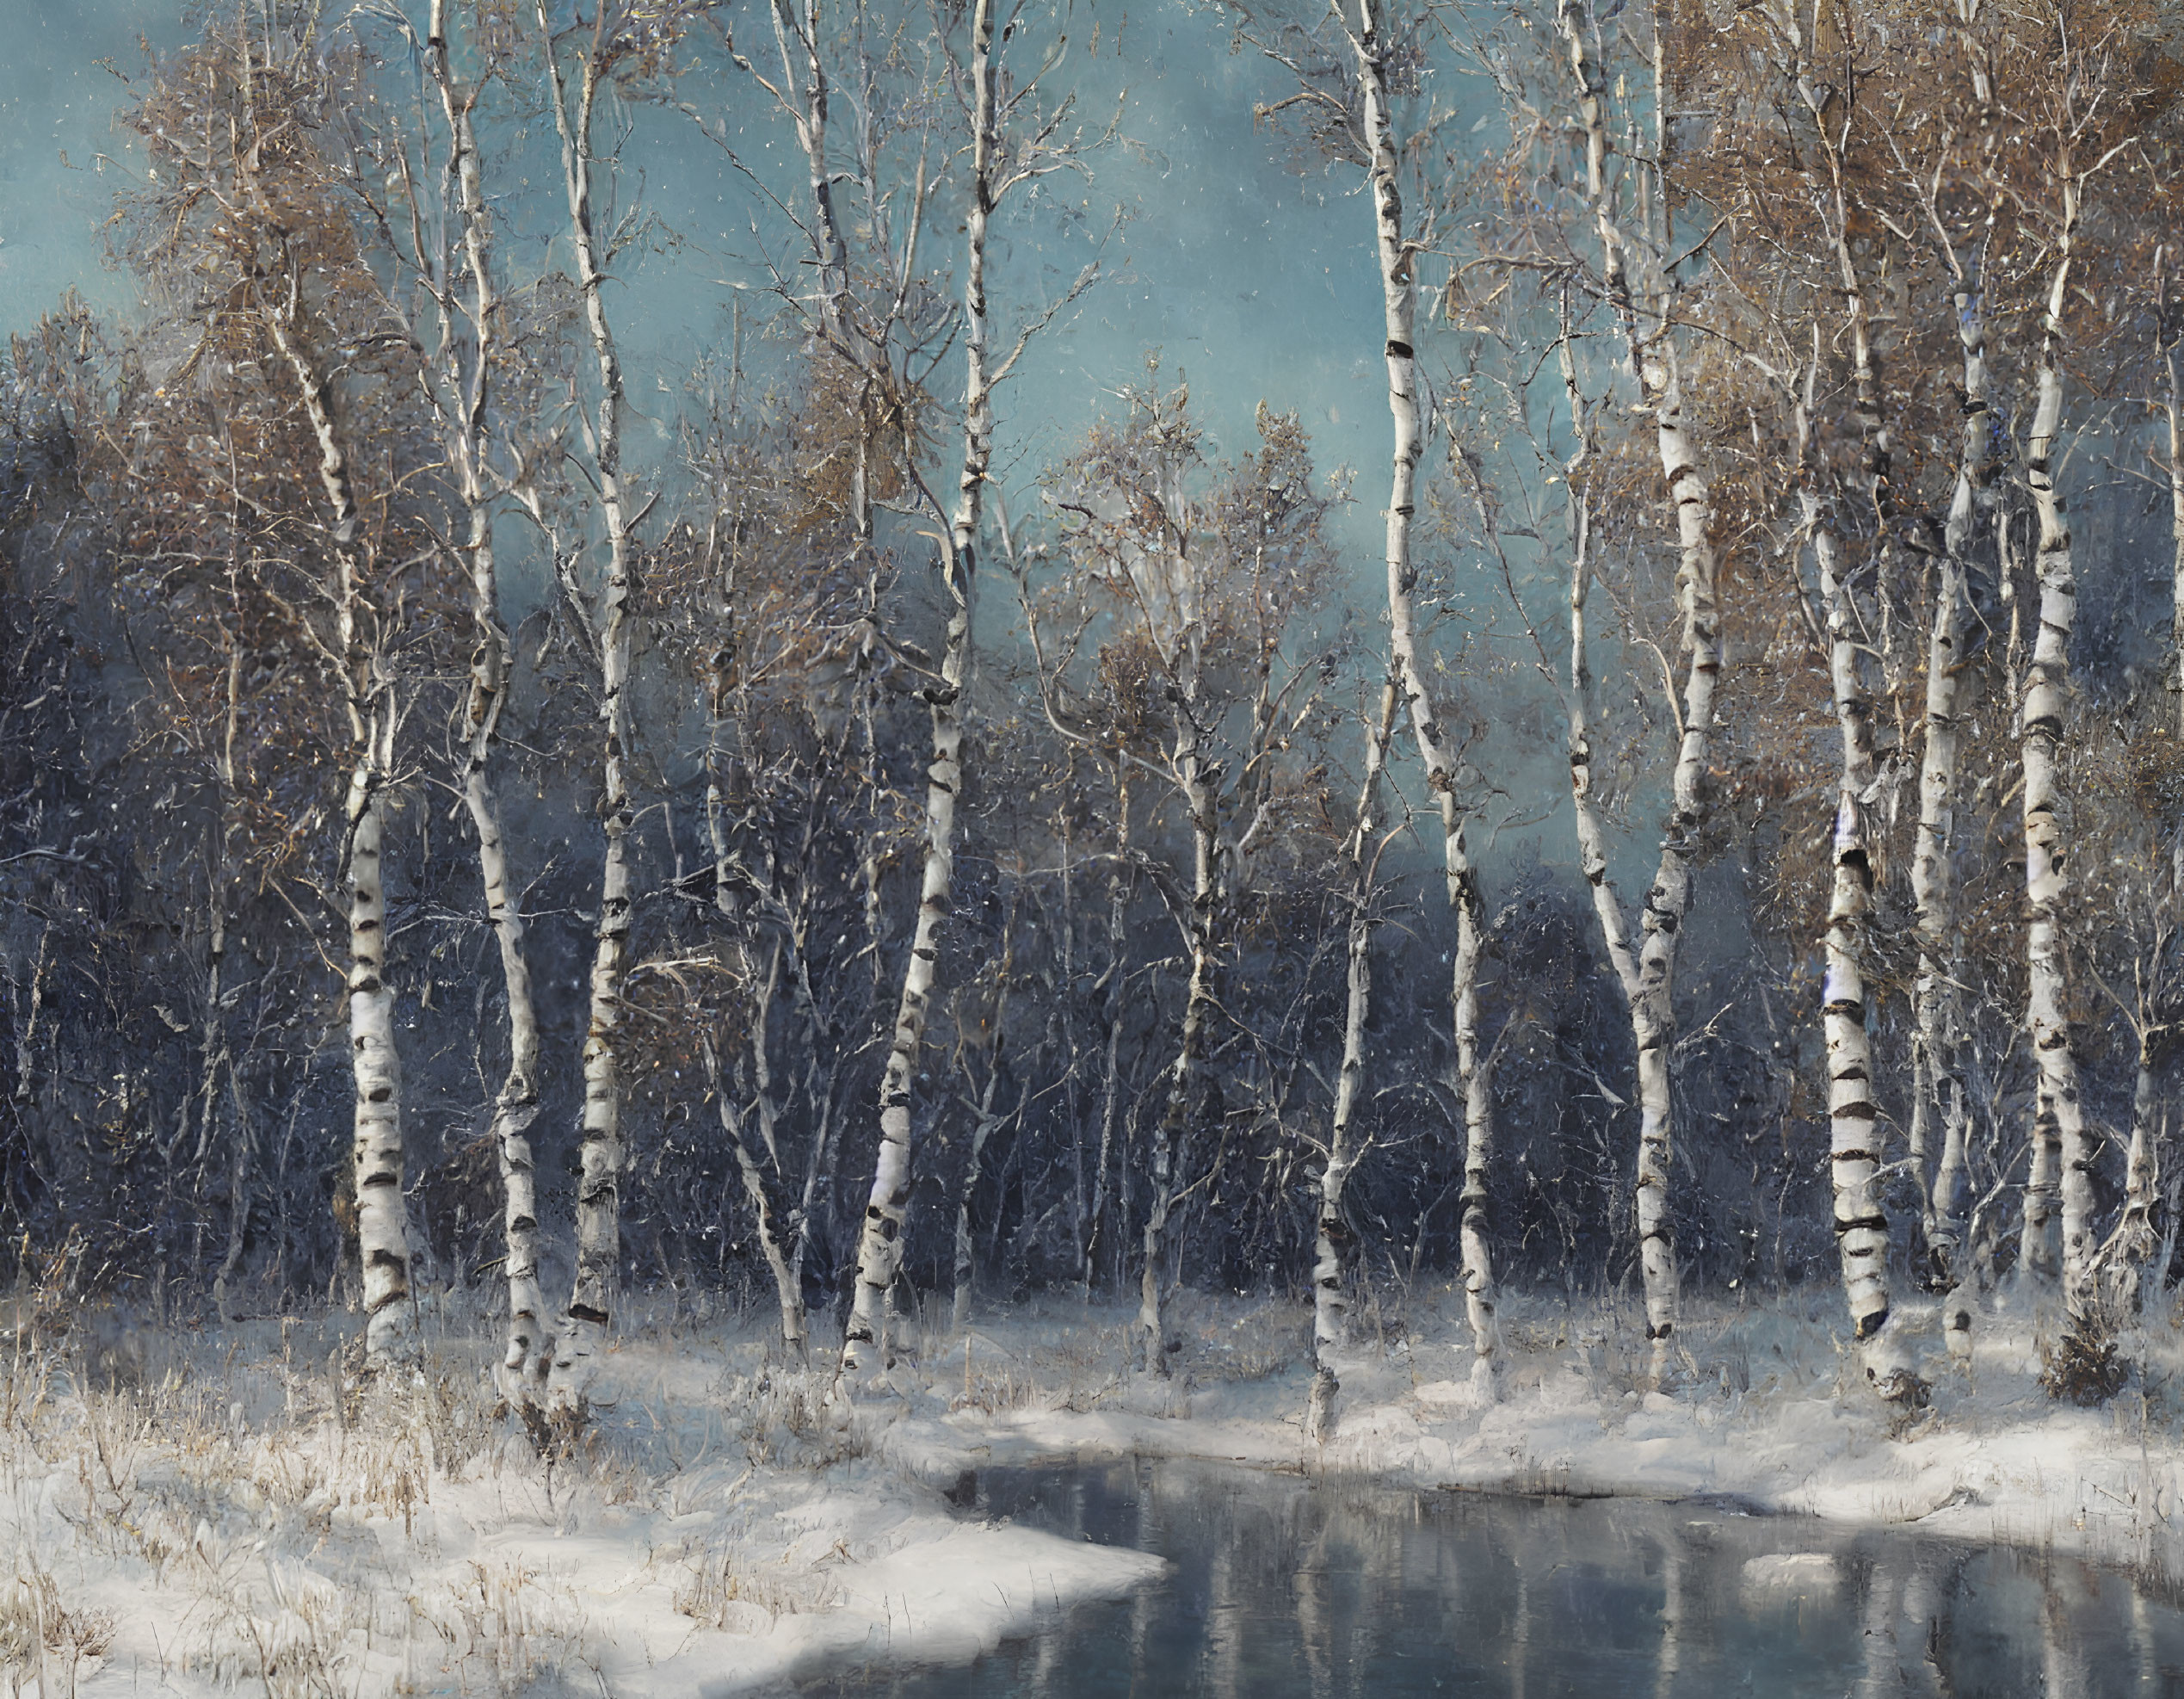 Snowy birch trees and creek in serene winter landscape